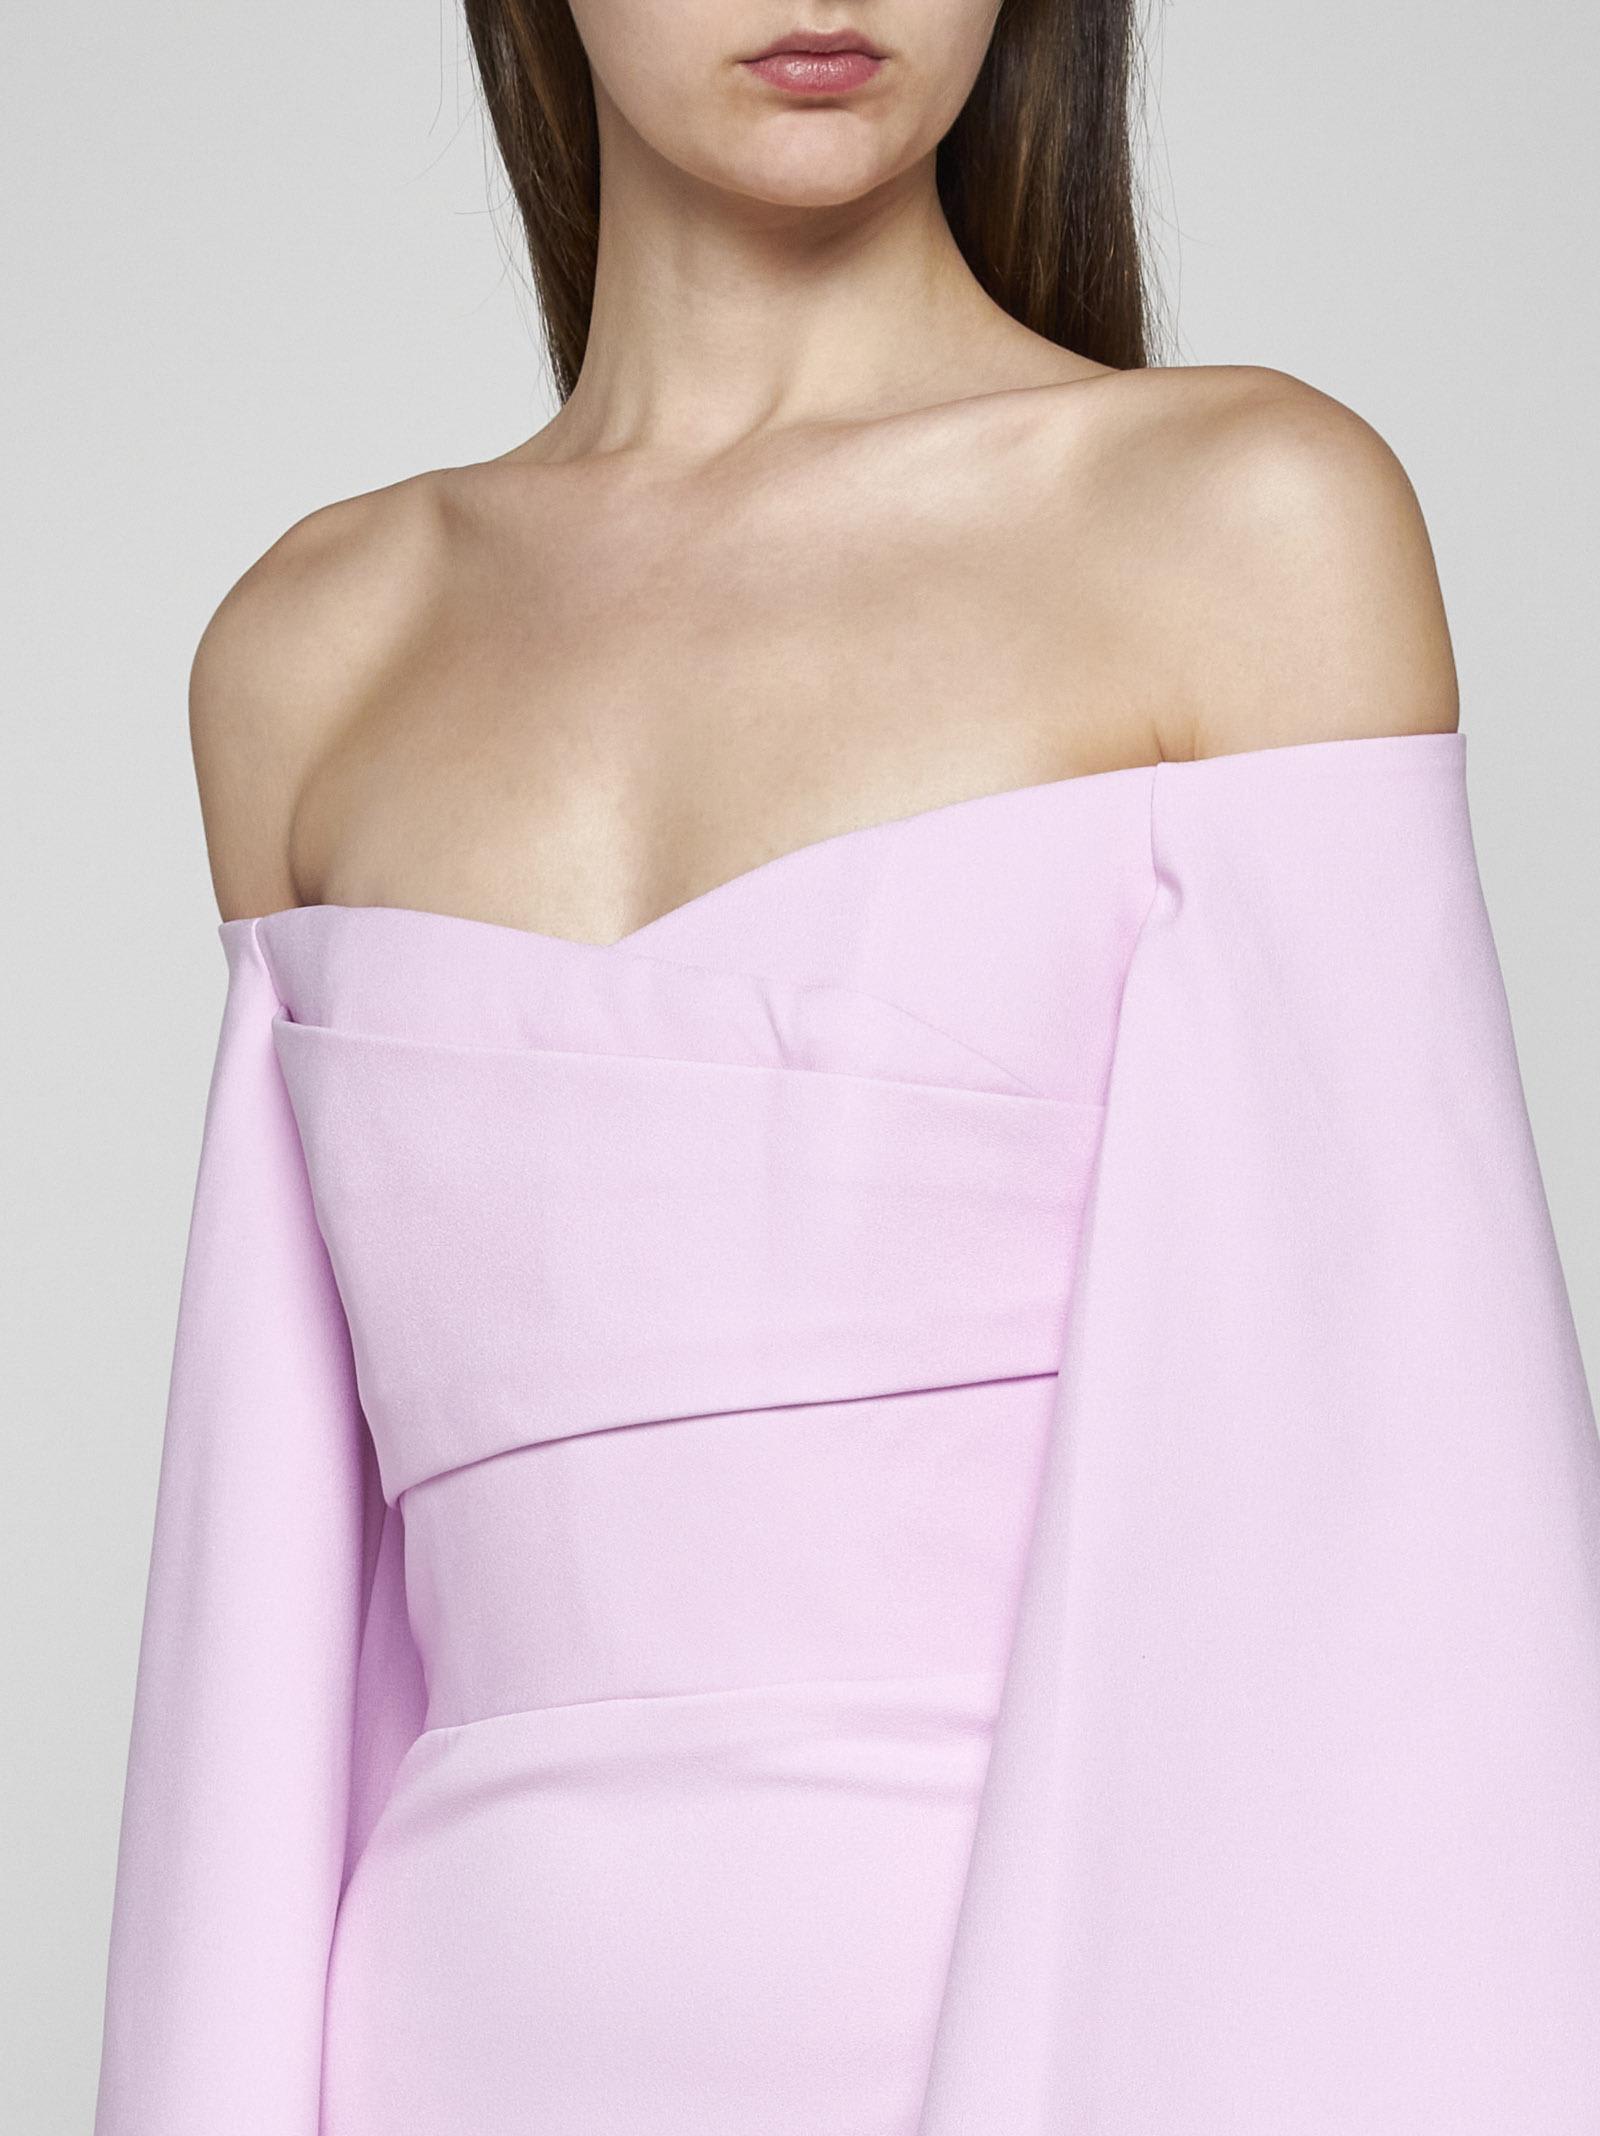 Shop Solace London Eliana Maxi Dress In Blush Pink